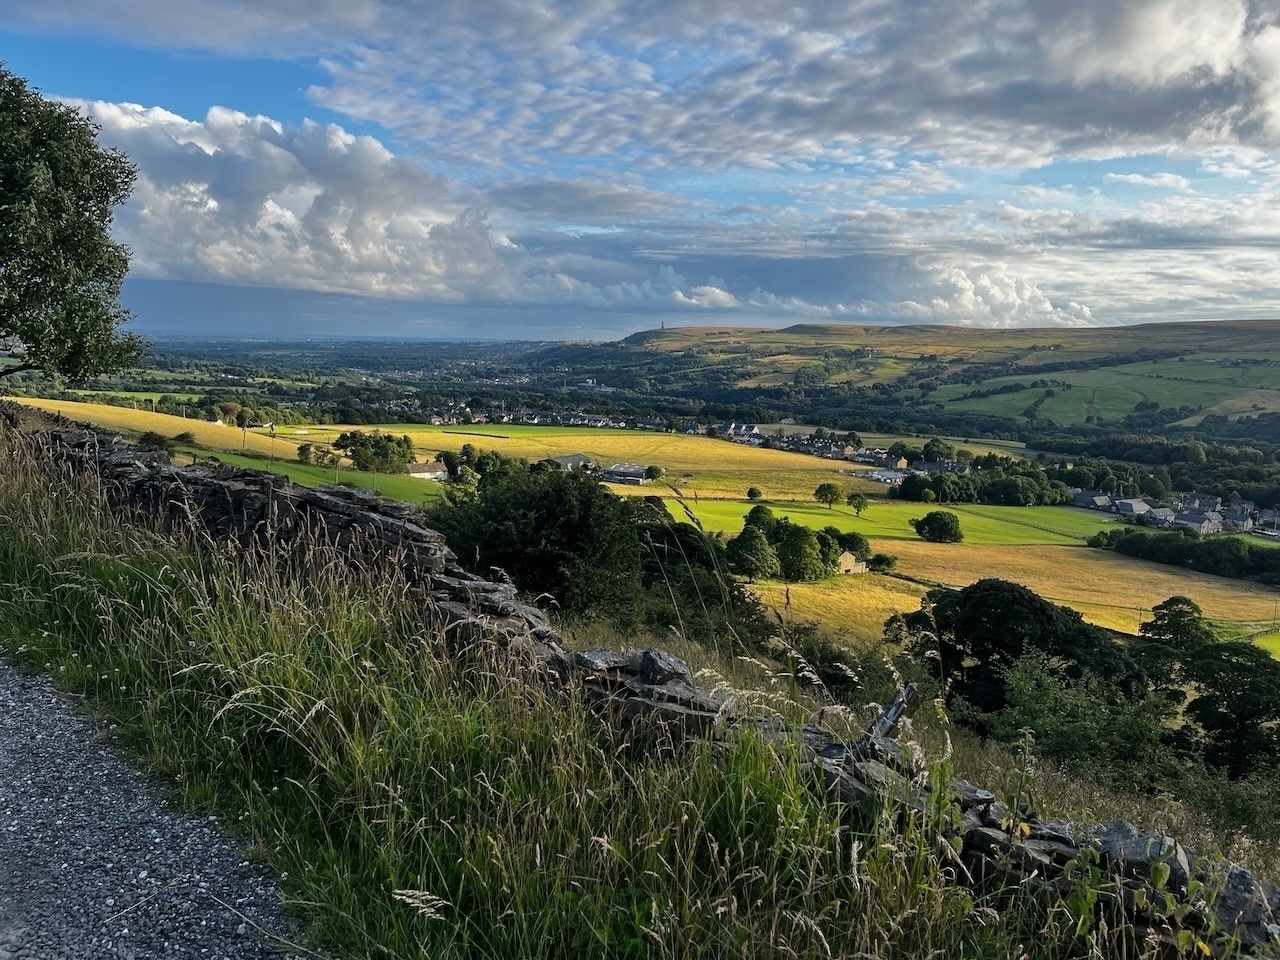 View across the Irwell Valley